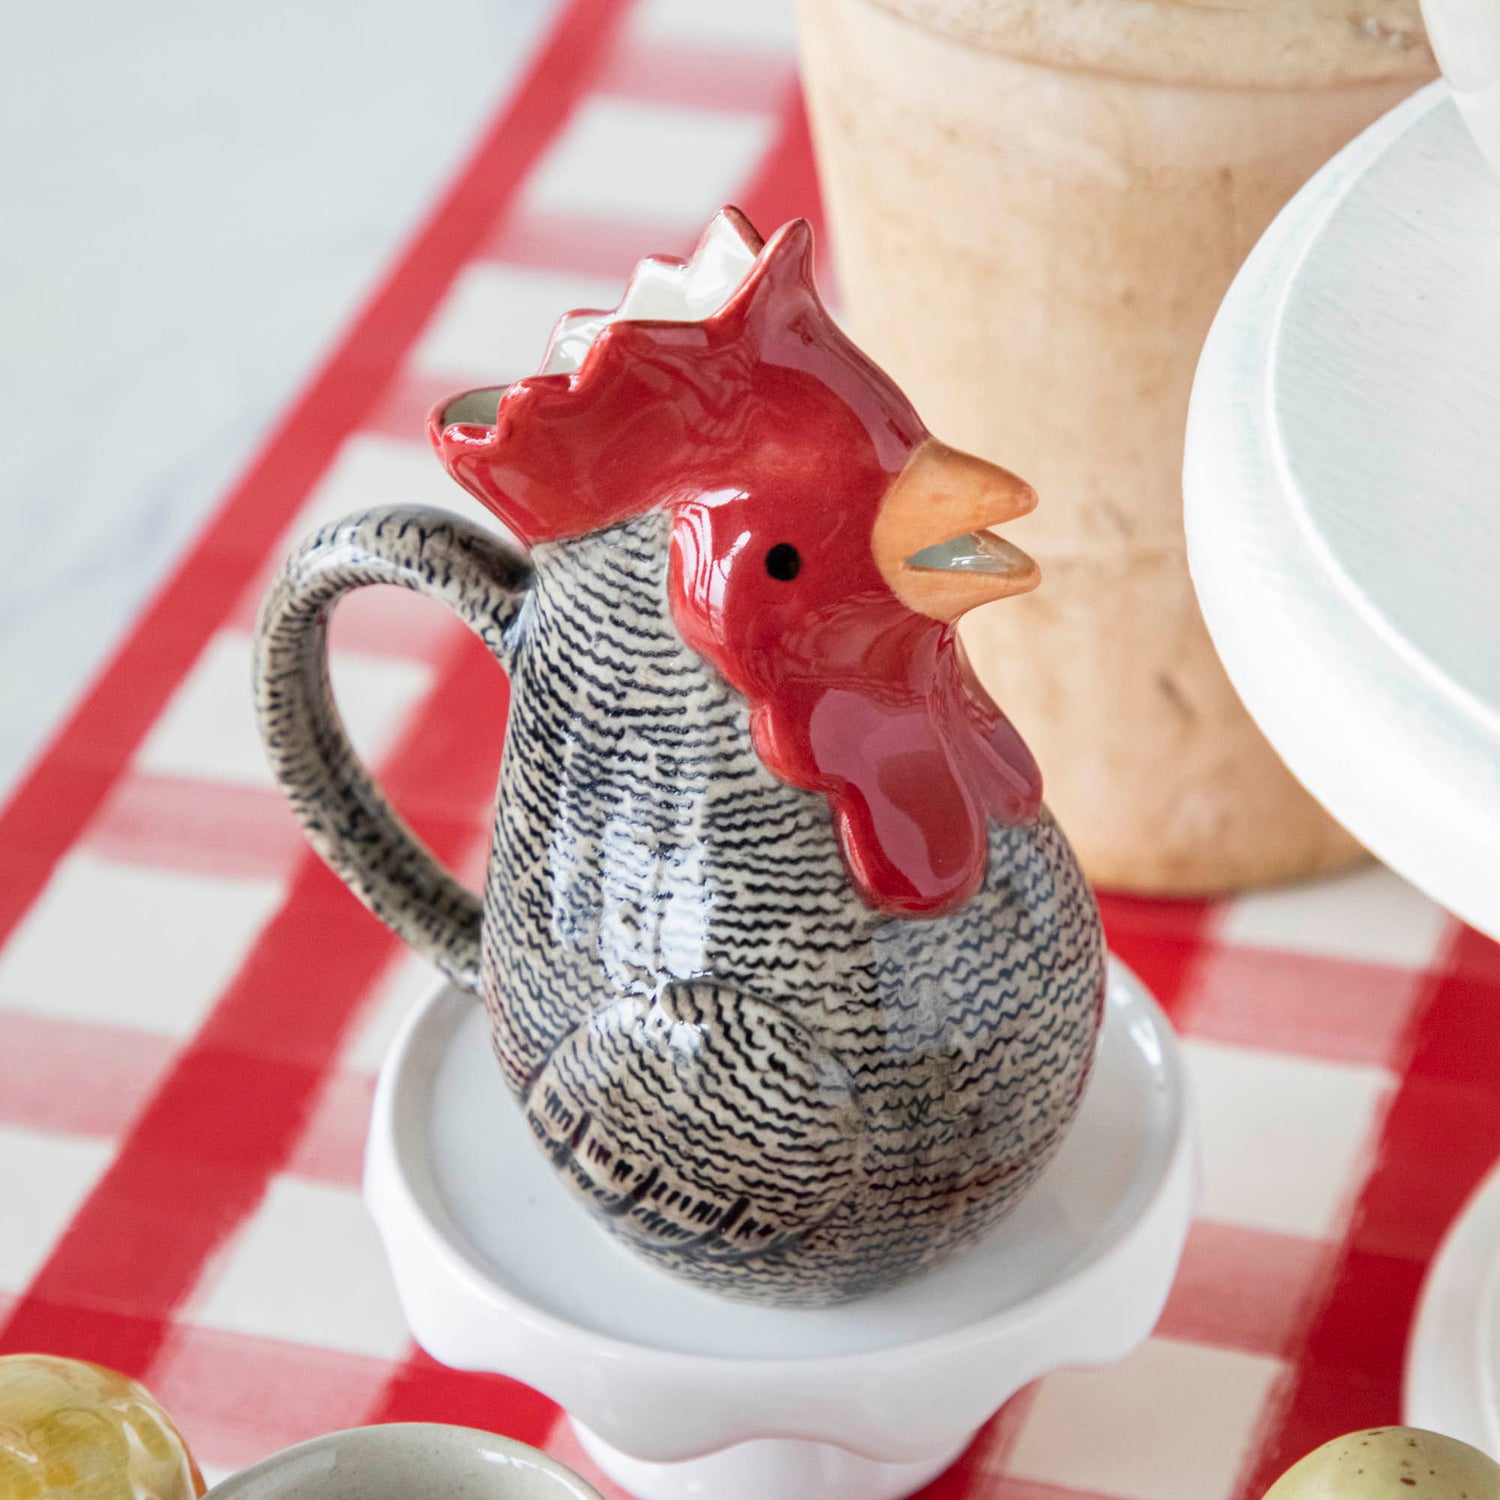 Ceramic Egg Cup Holder Standing Color Chicken